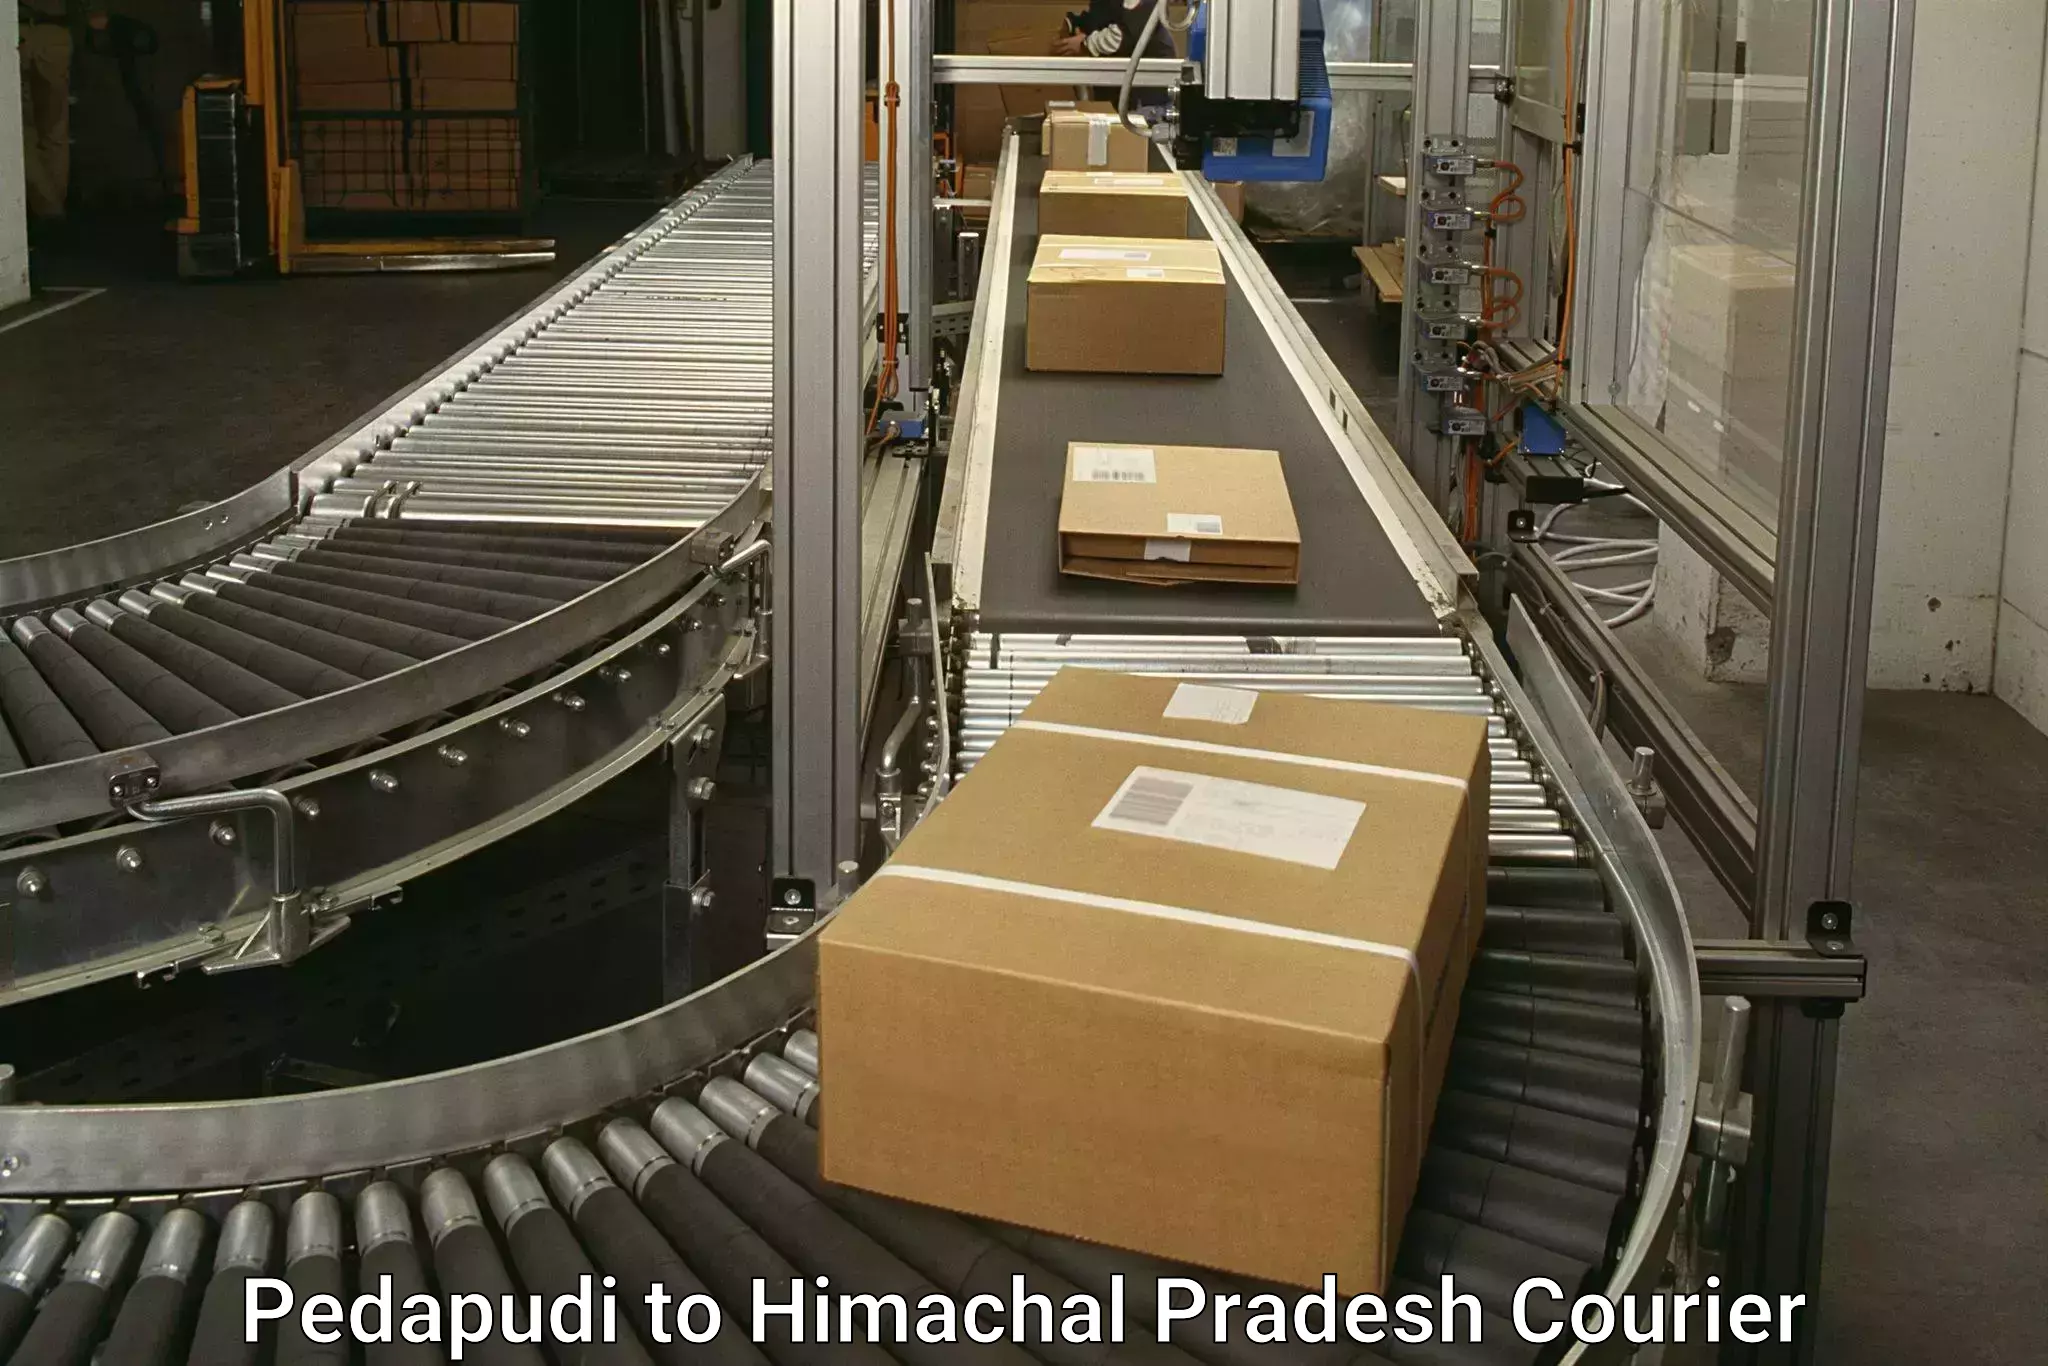 State-of-the-art courier technology Pedapudi to Sundar Nagar